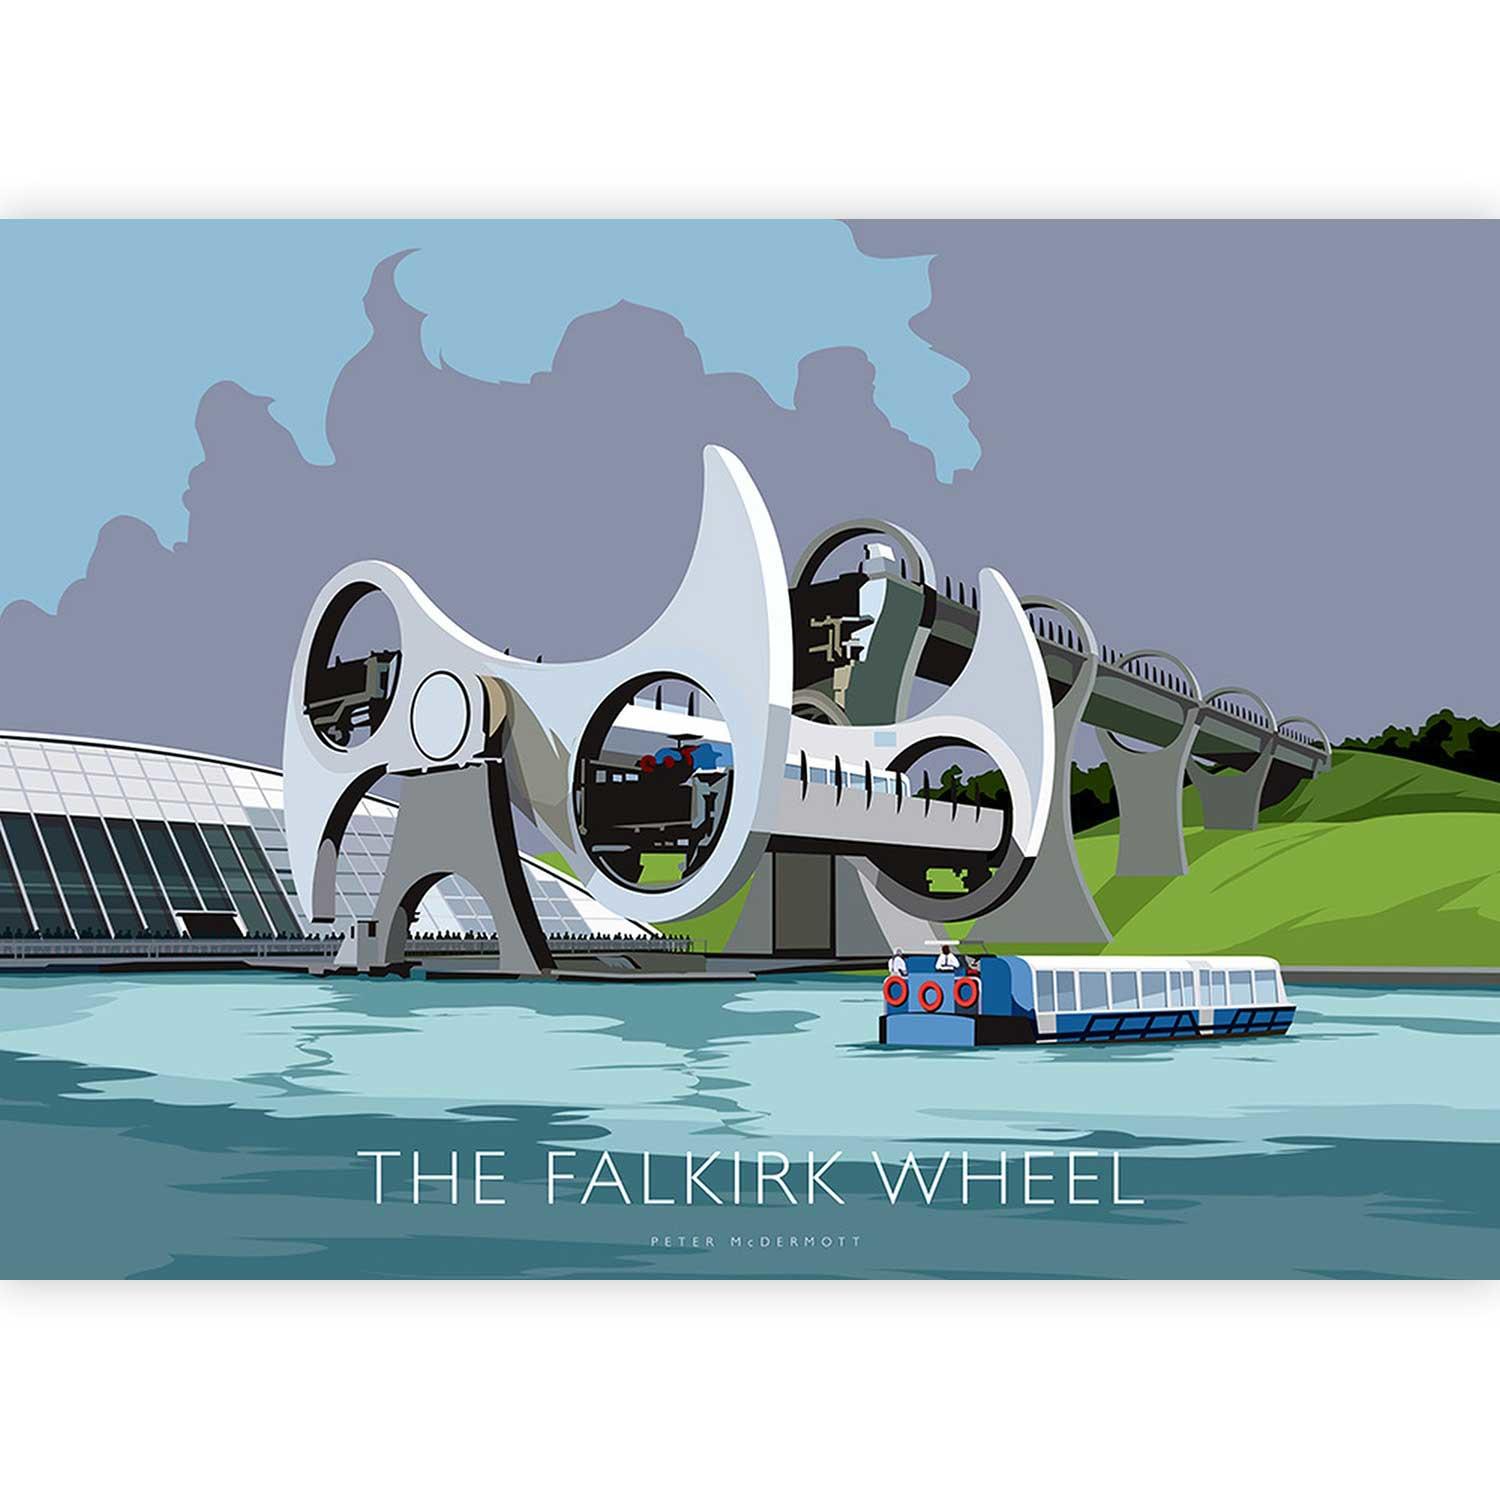 Falkirk Wheel by Peter McDermott